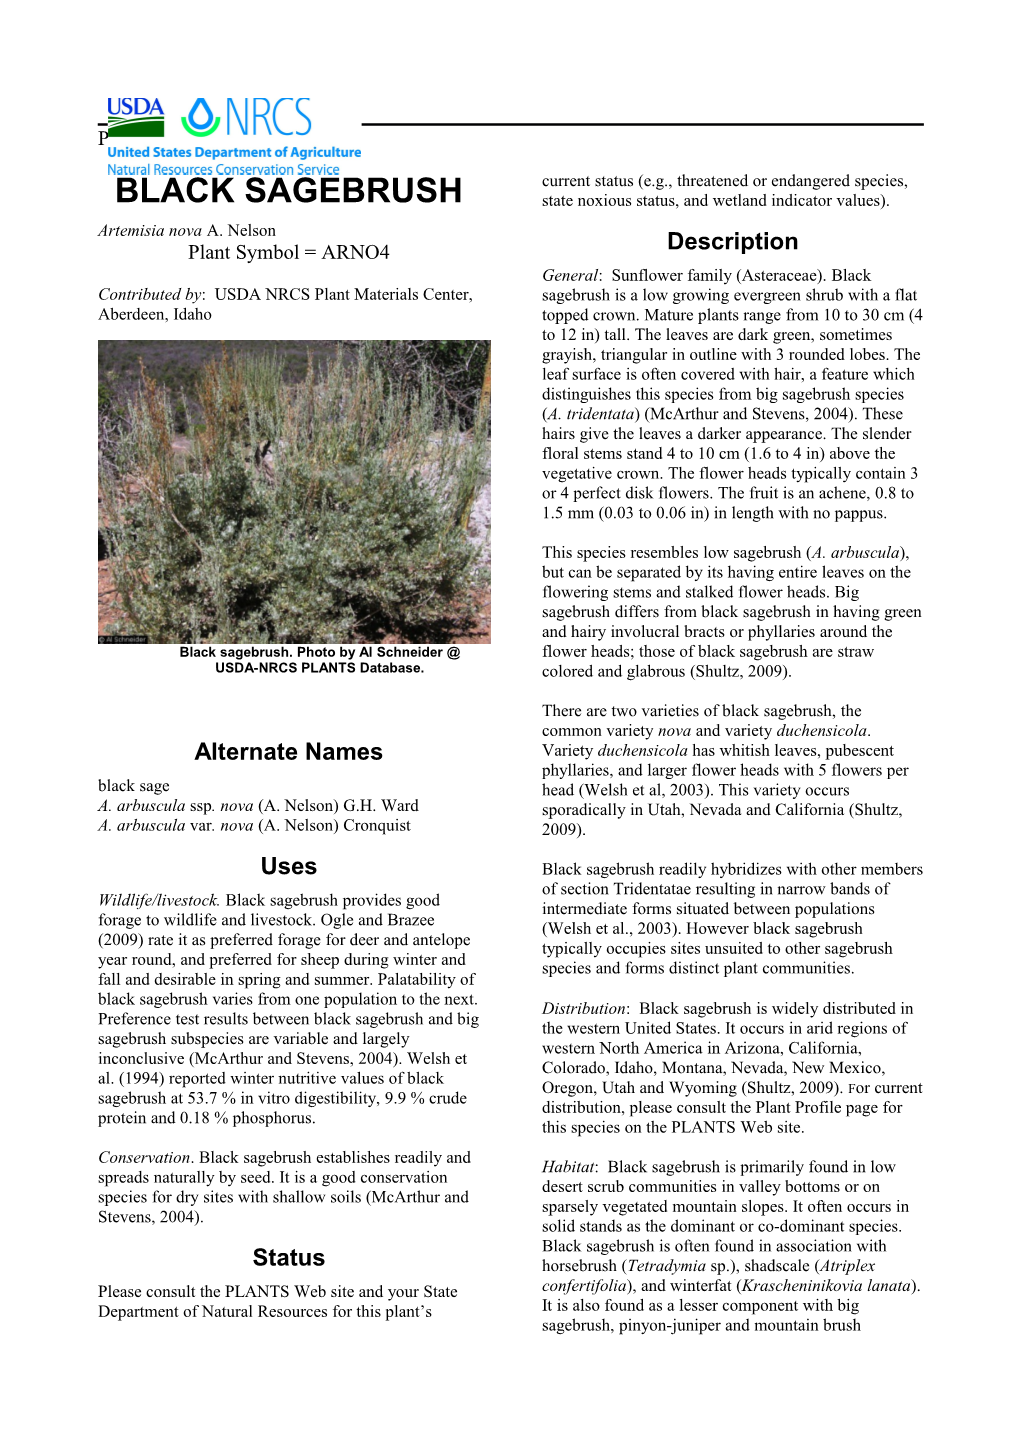 Plant Guide for Black Sagebrush (Artemisia Nova)